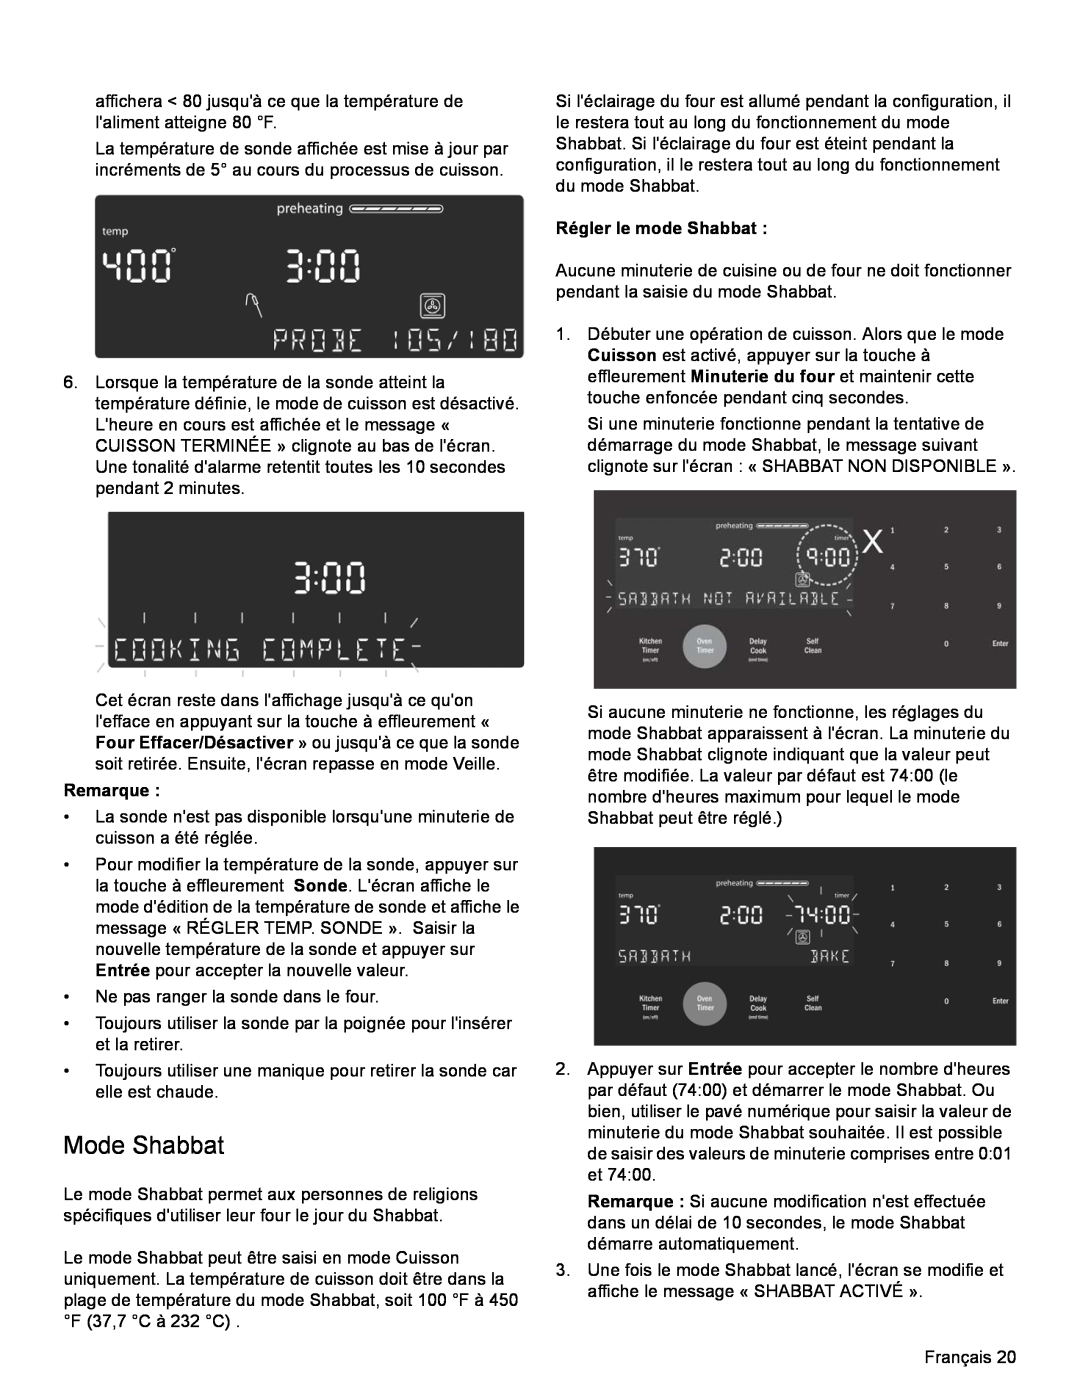 Bosch Appliances HDI8054U manual Mode Shabbat, Régler le mode Shabbat, Remarque 